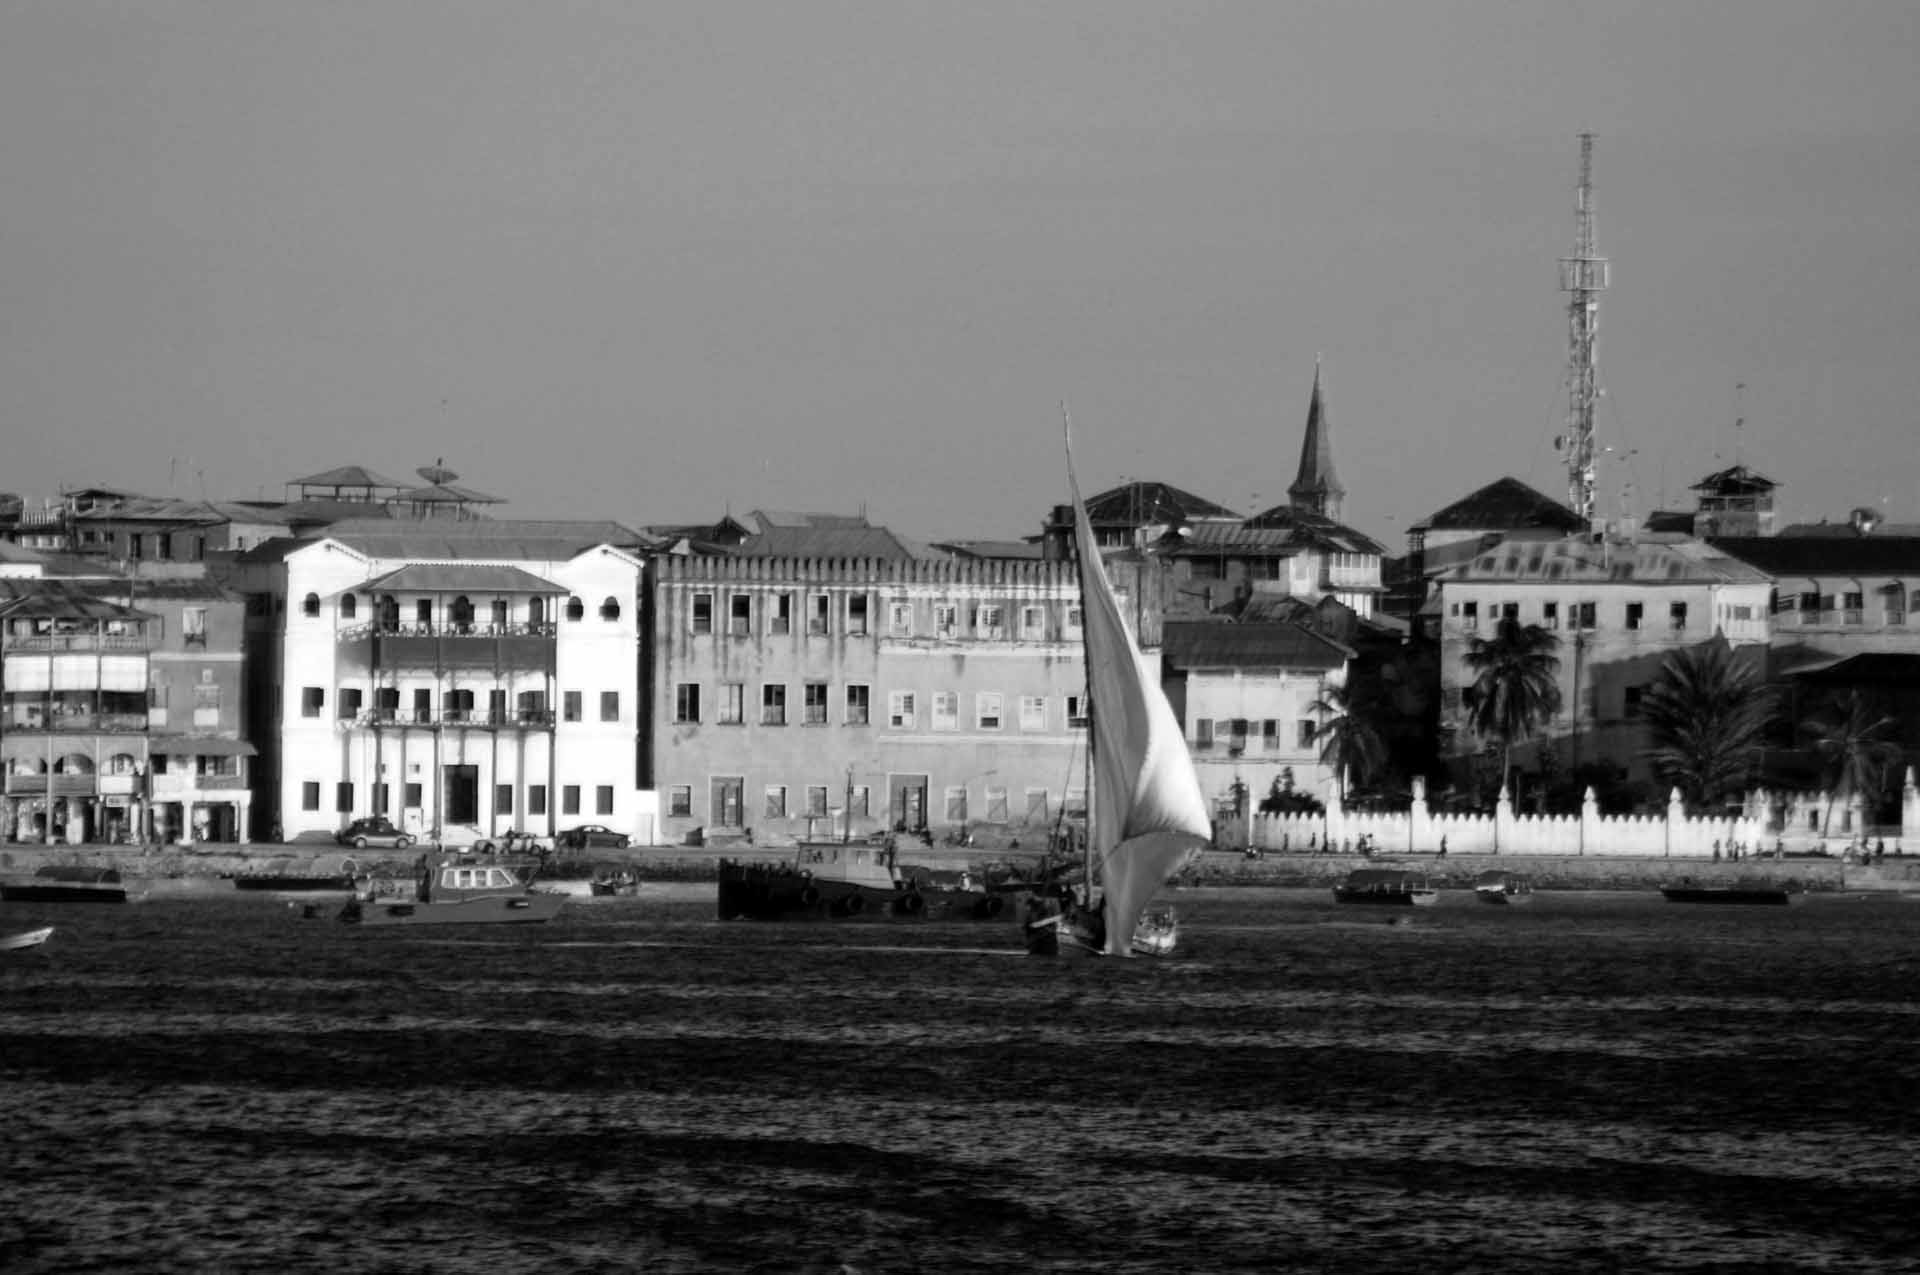 Stone Town City in Zanzibar